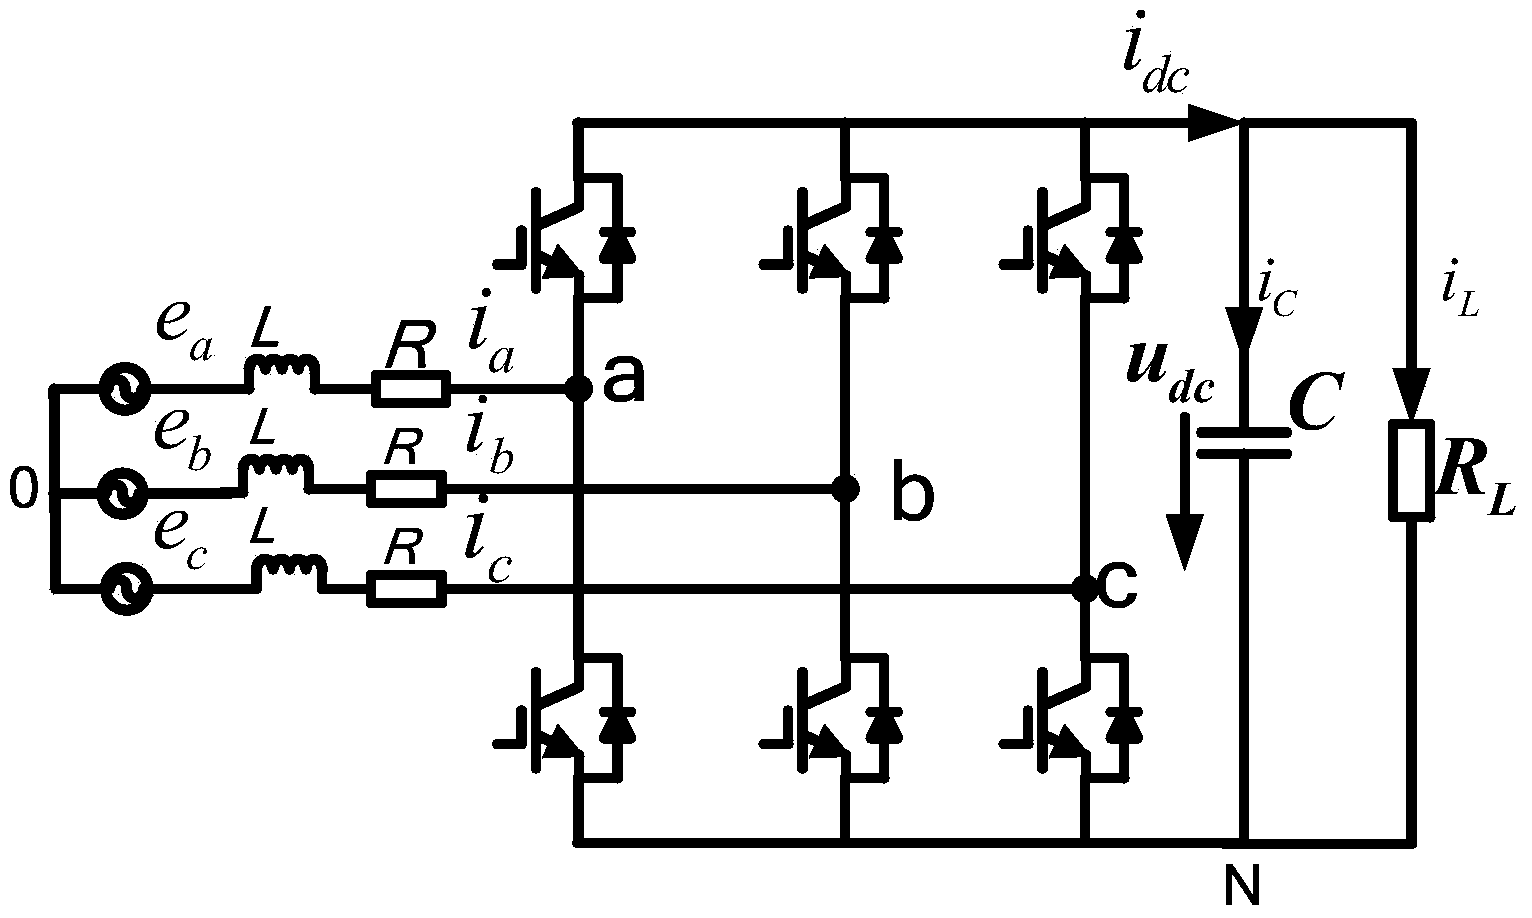 Three-phase PWM rectifier control method